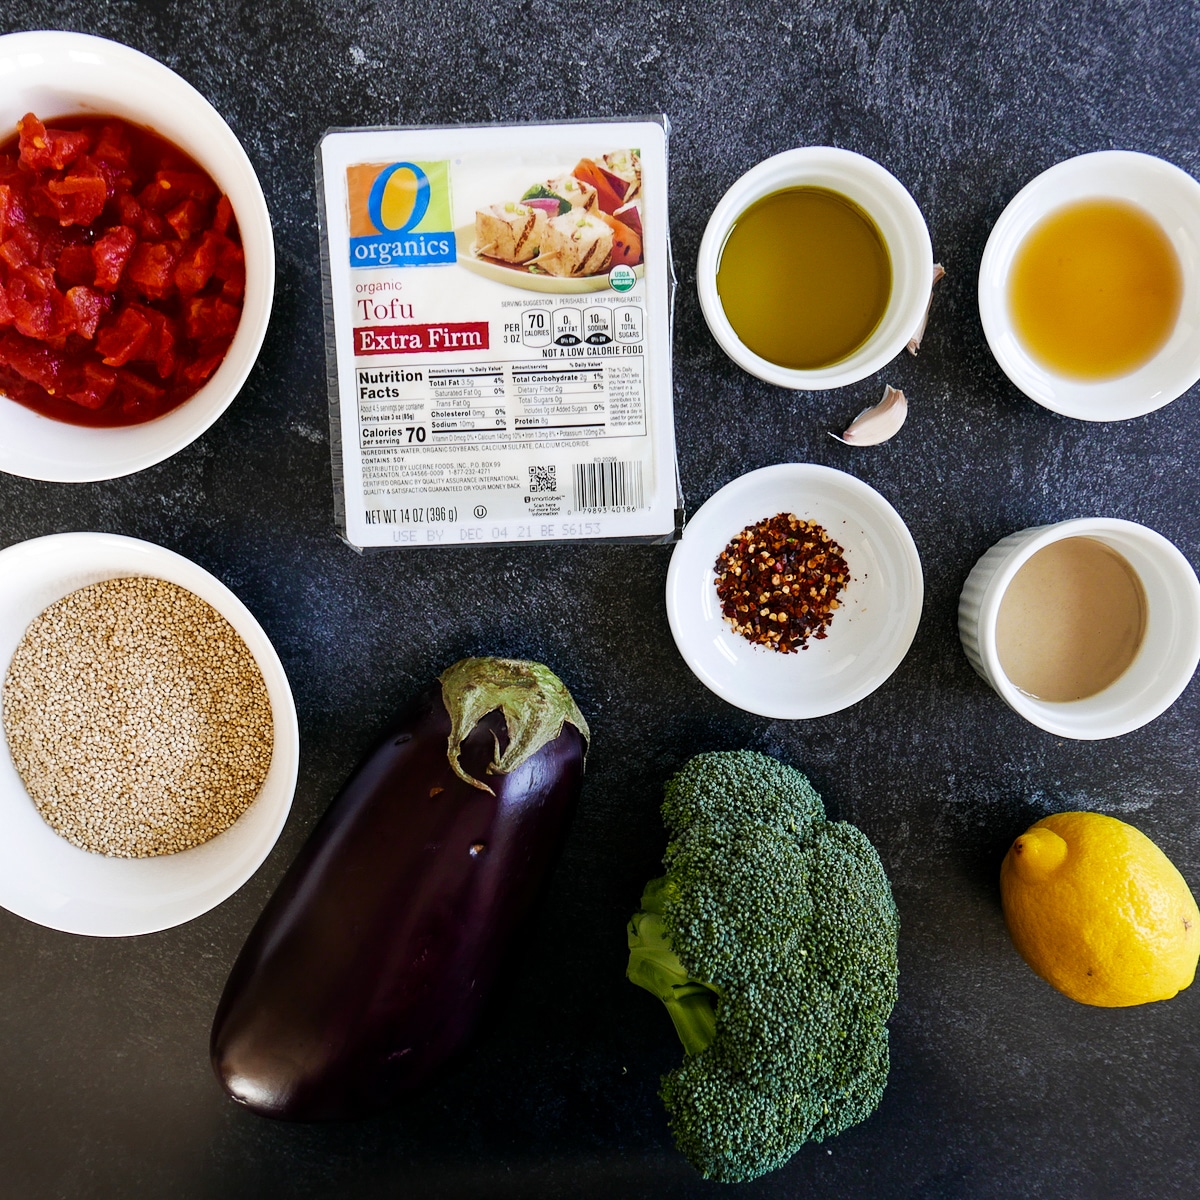 tomatoes, broccoli, eggplant, tofu, quinoa, tahini, and other recipe ingredients.